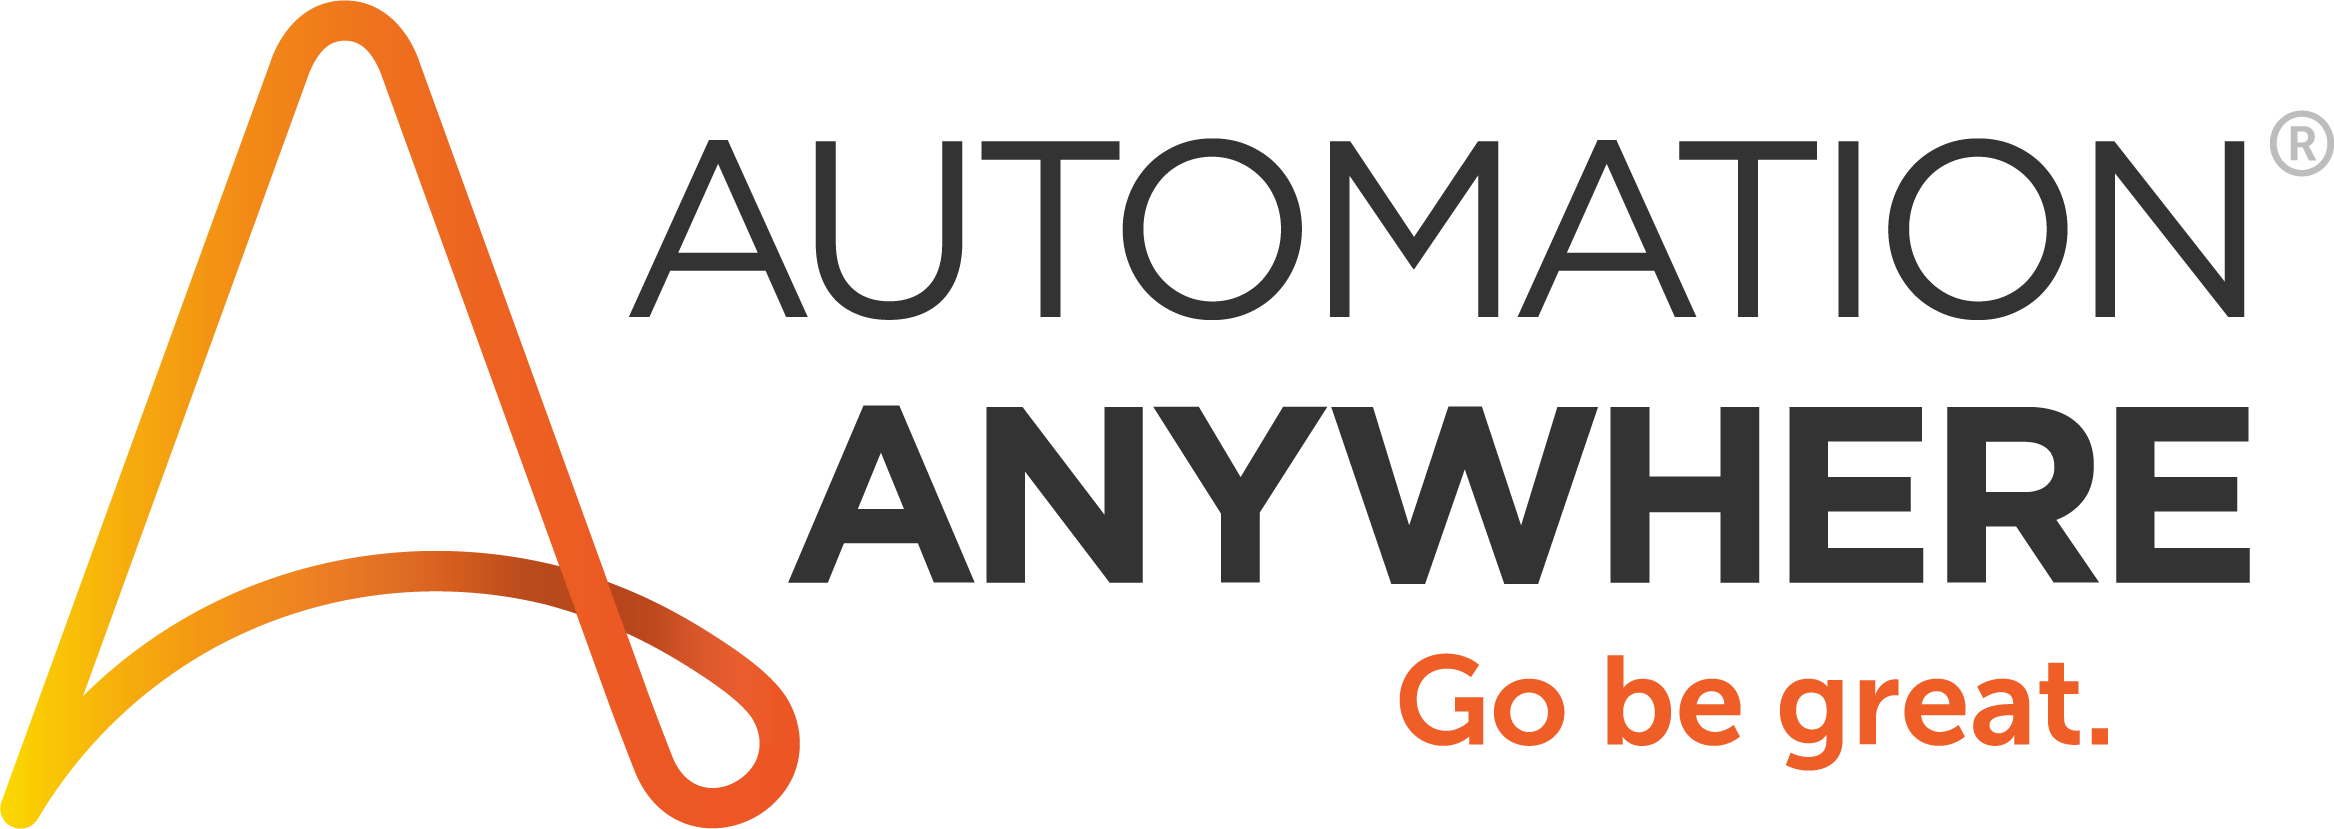 Vision Fund investment portfolio company Automation Anywhere's logo